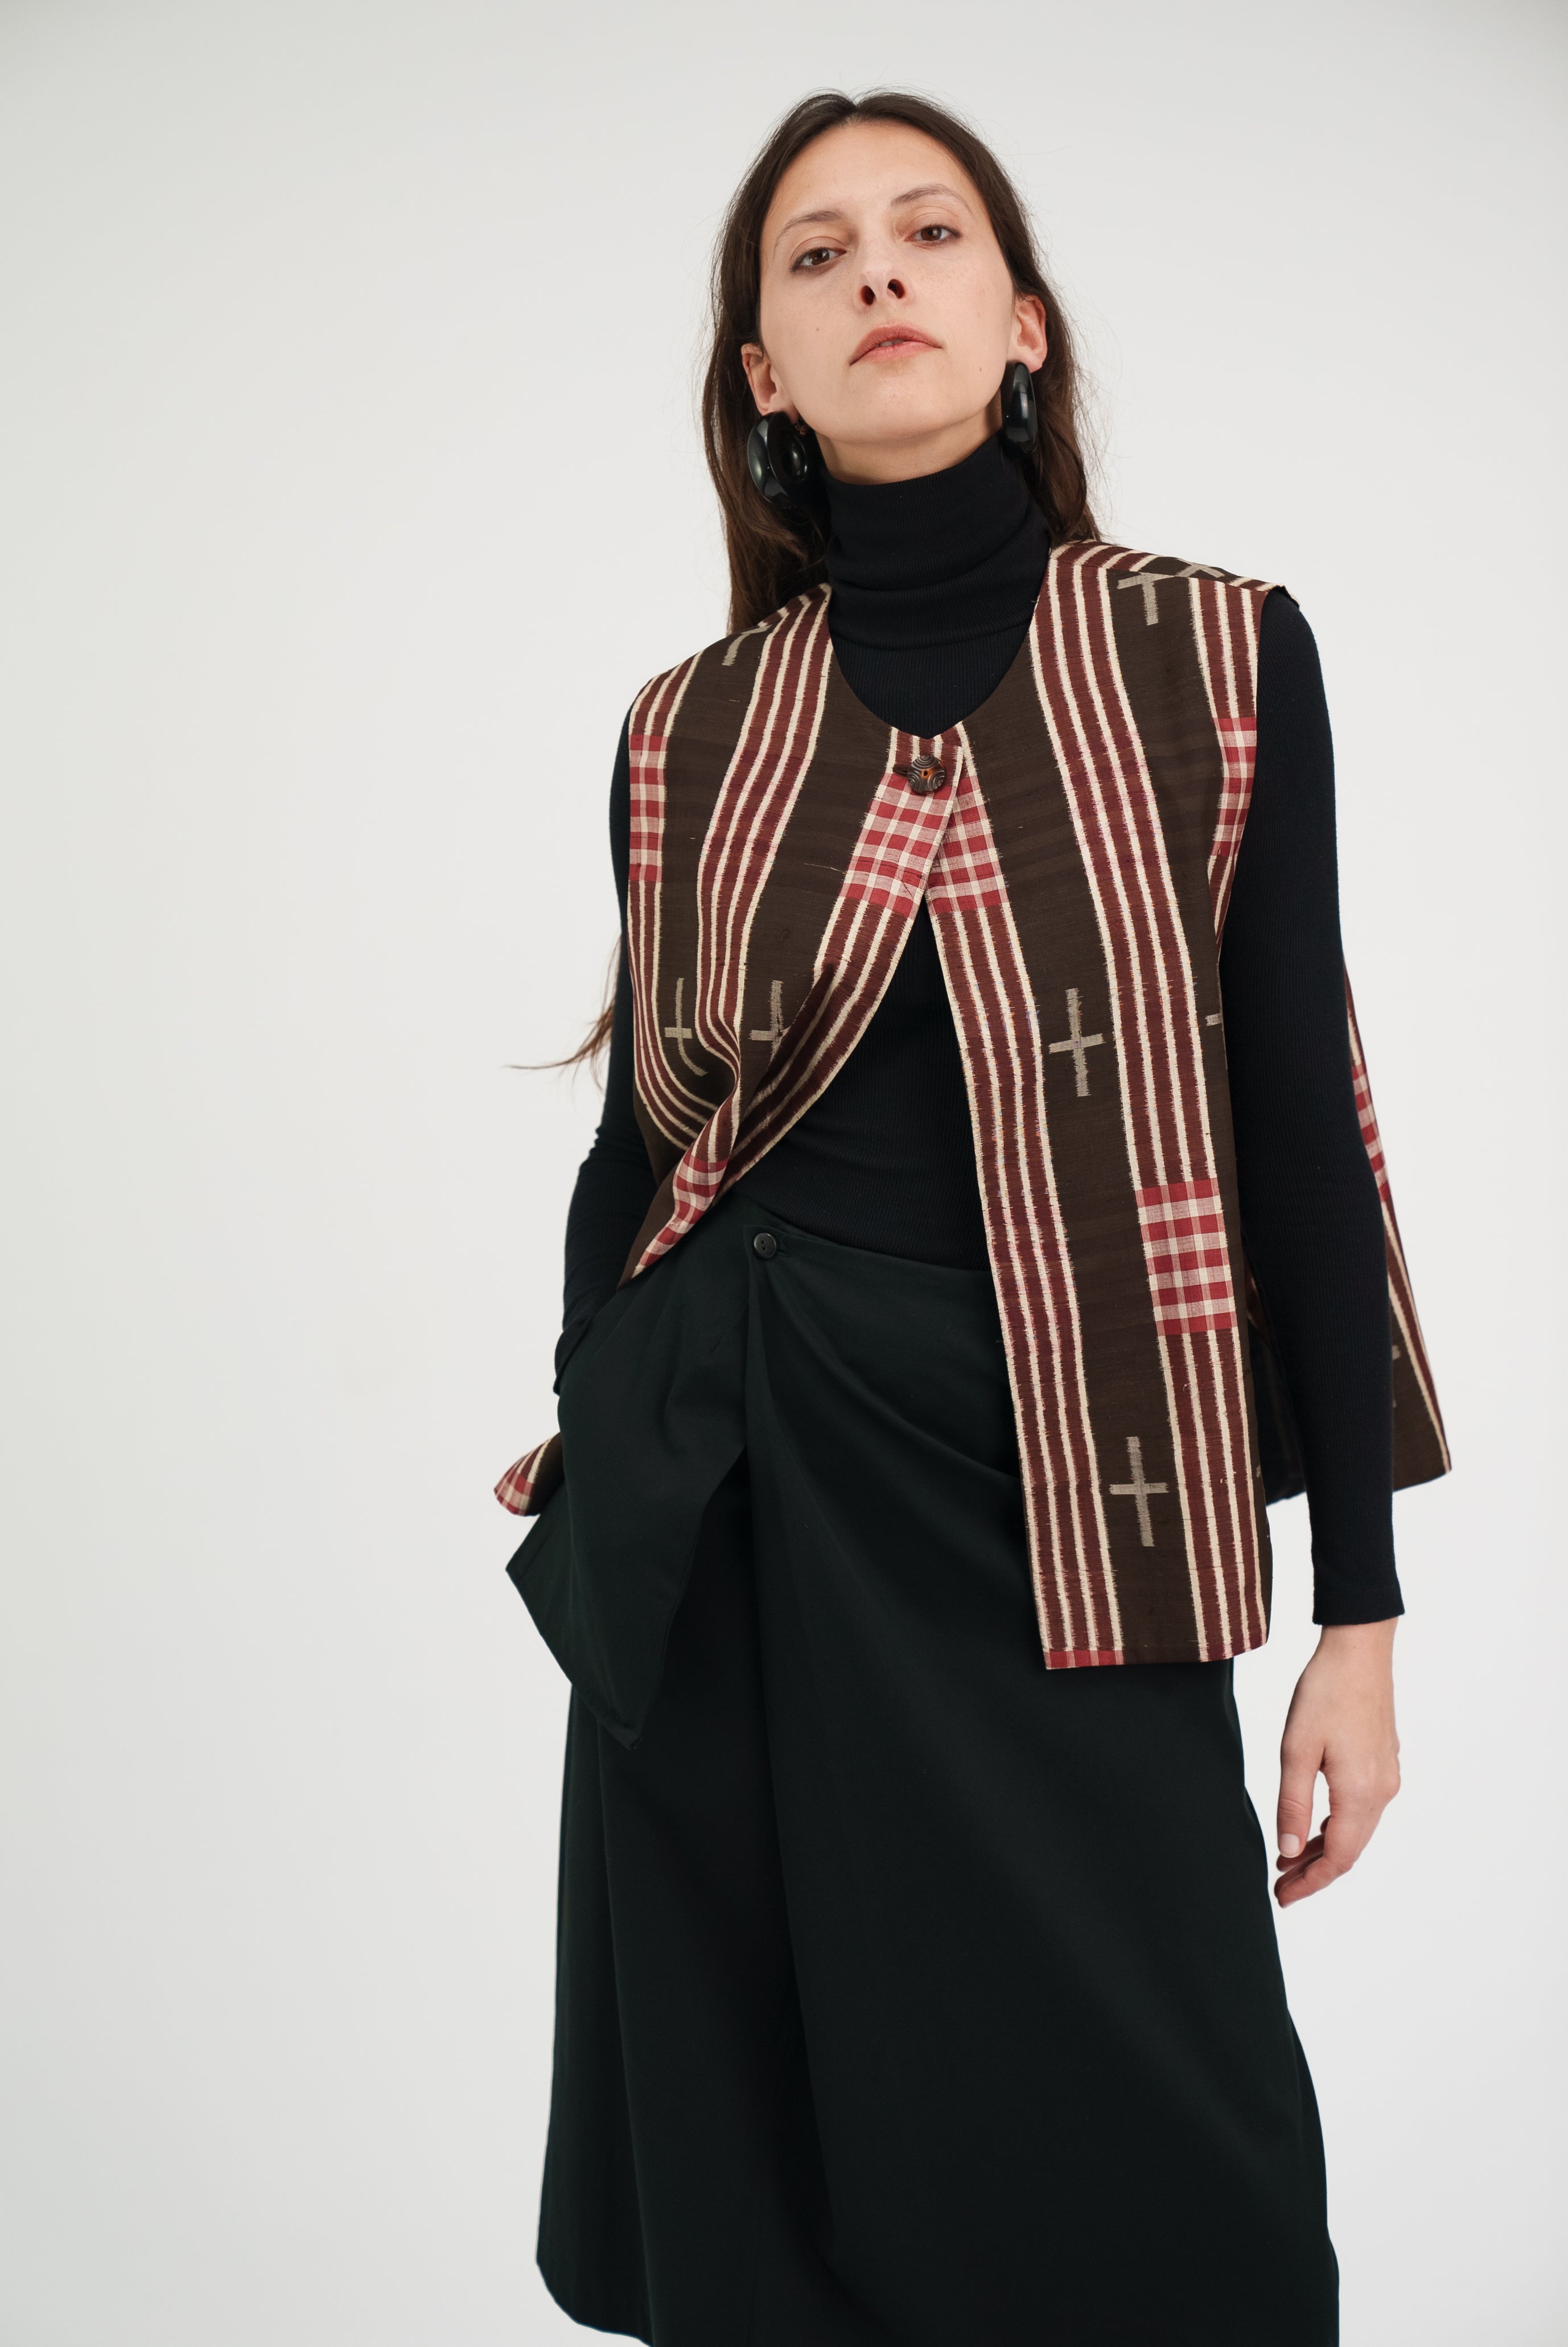 Round Neck Vest in Vintage Japanese Silk Ikat